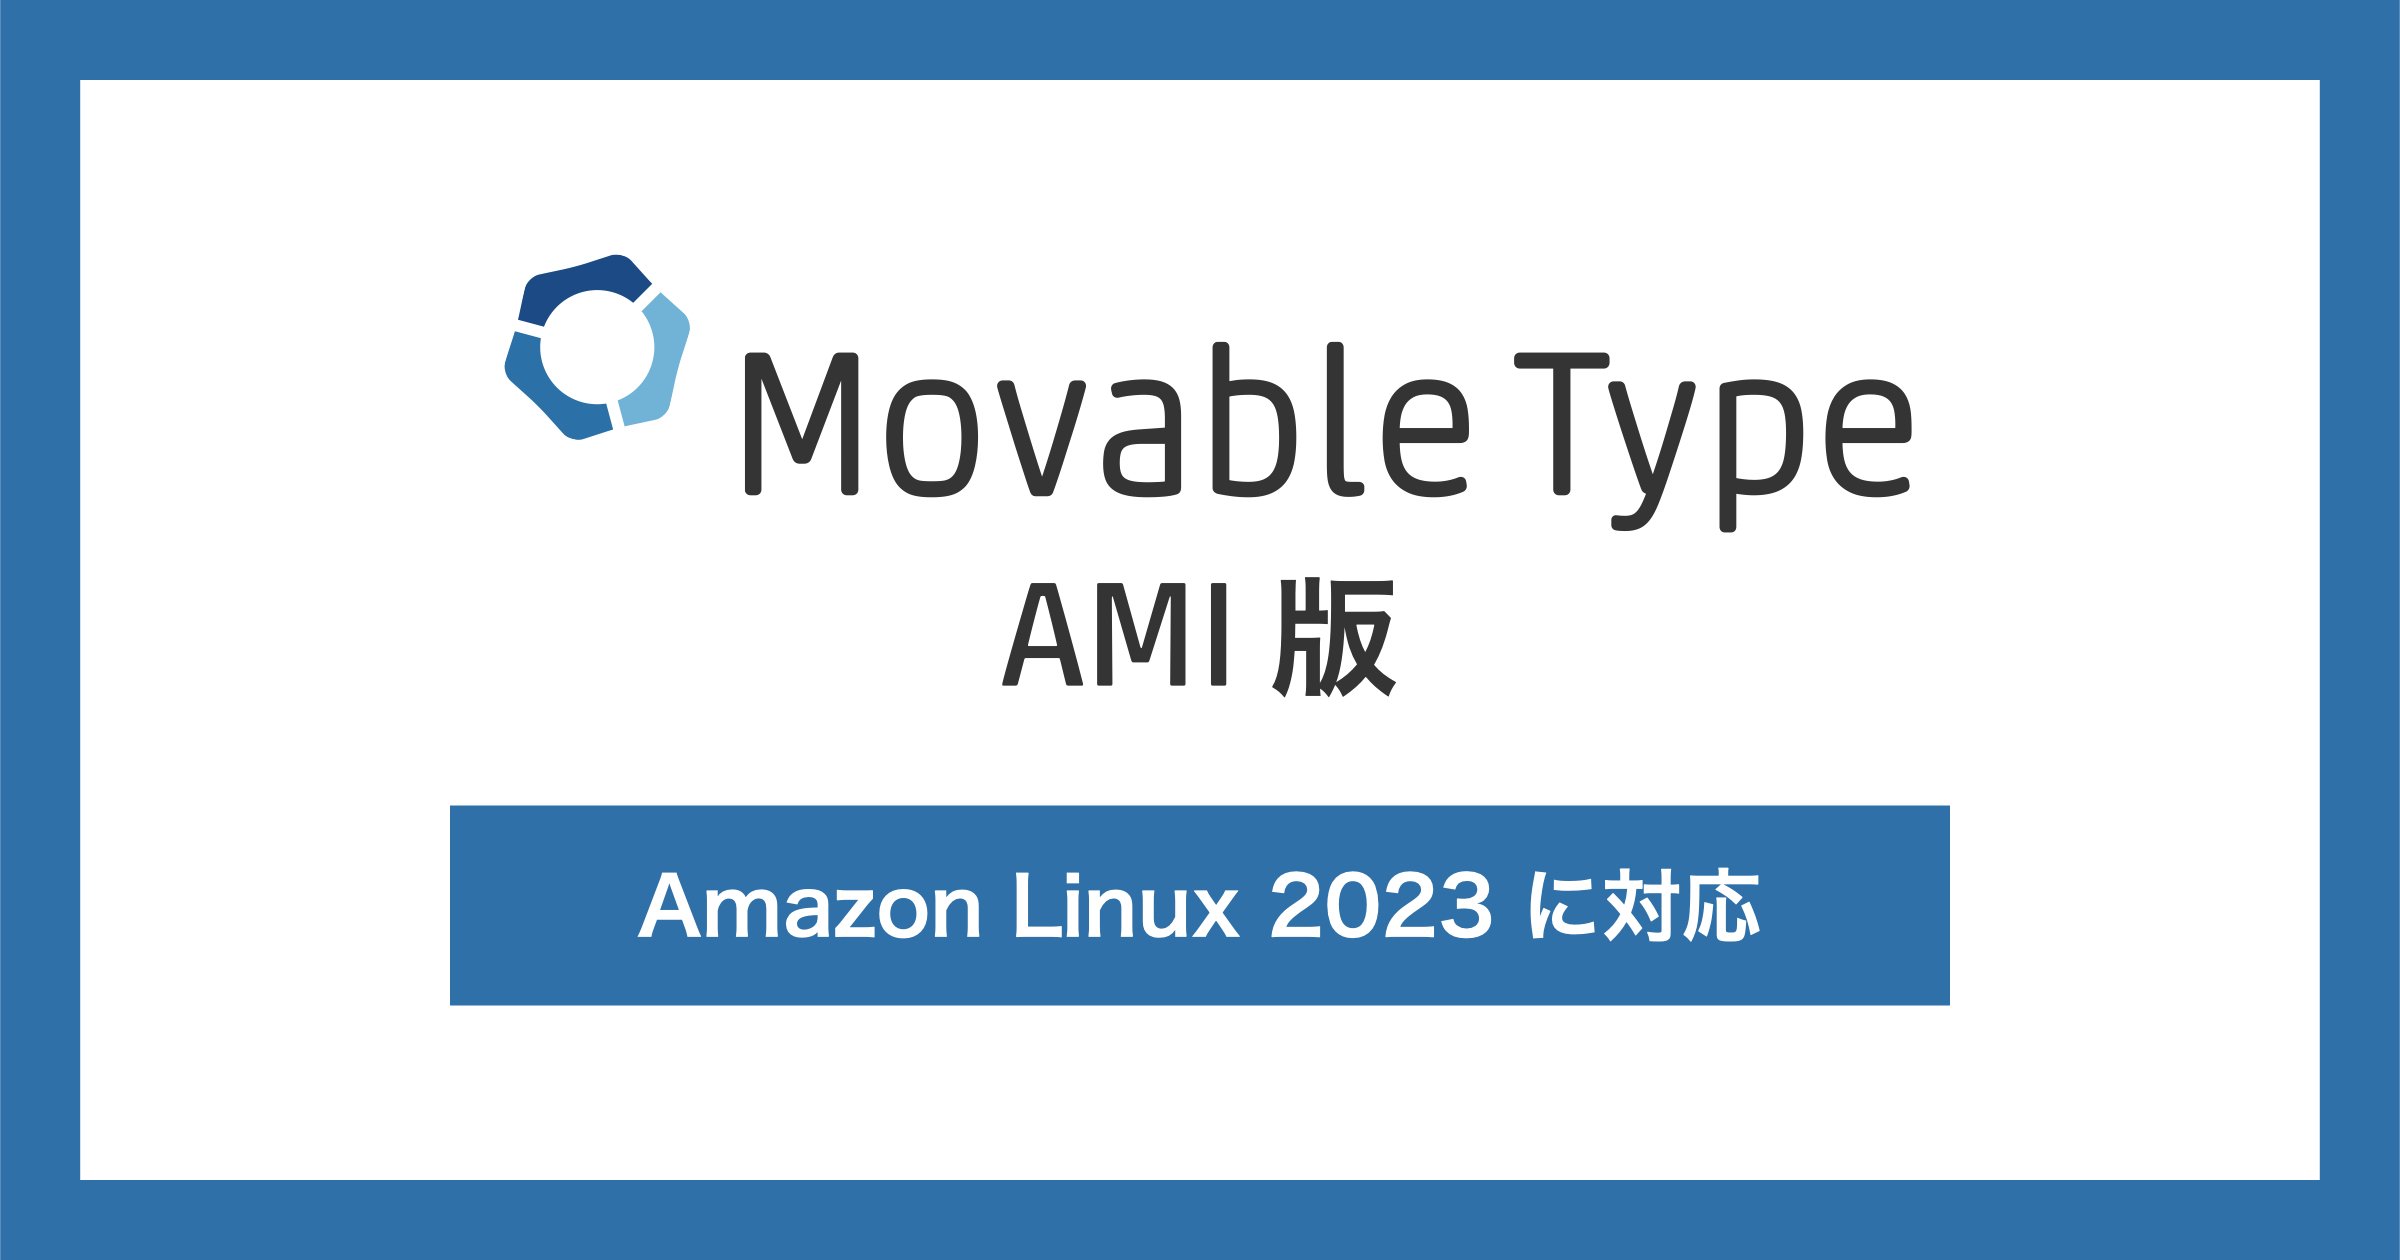 CMSプラットフォーム「Movable Type AMI版」Amazon Linux 2023 に対応したマシンイメージを追加